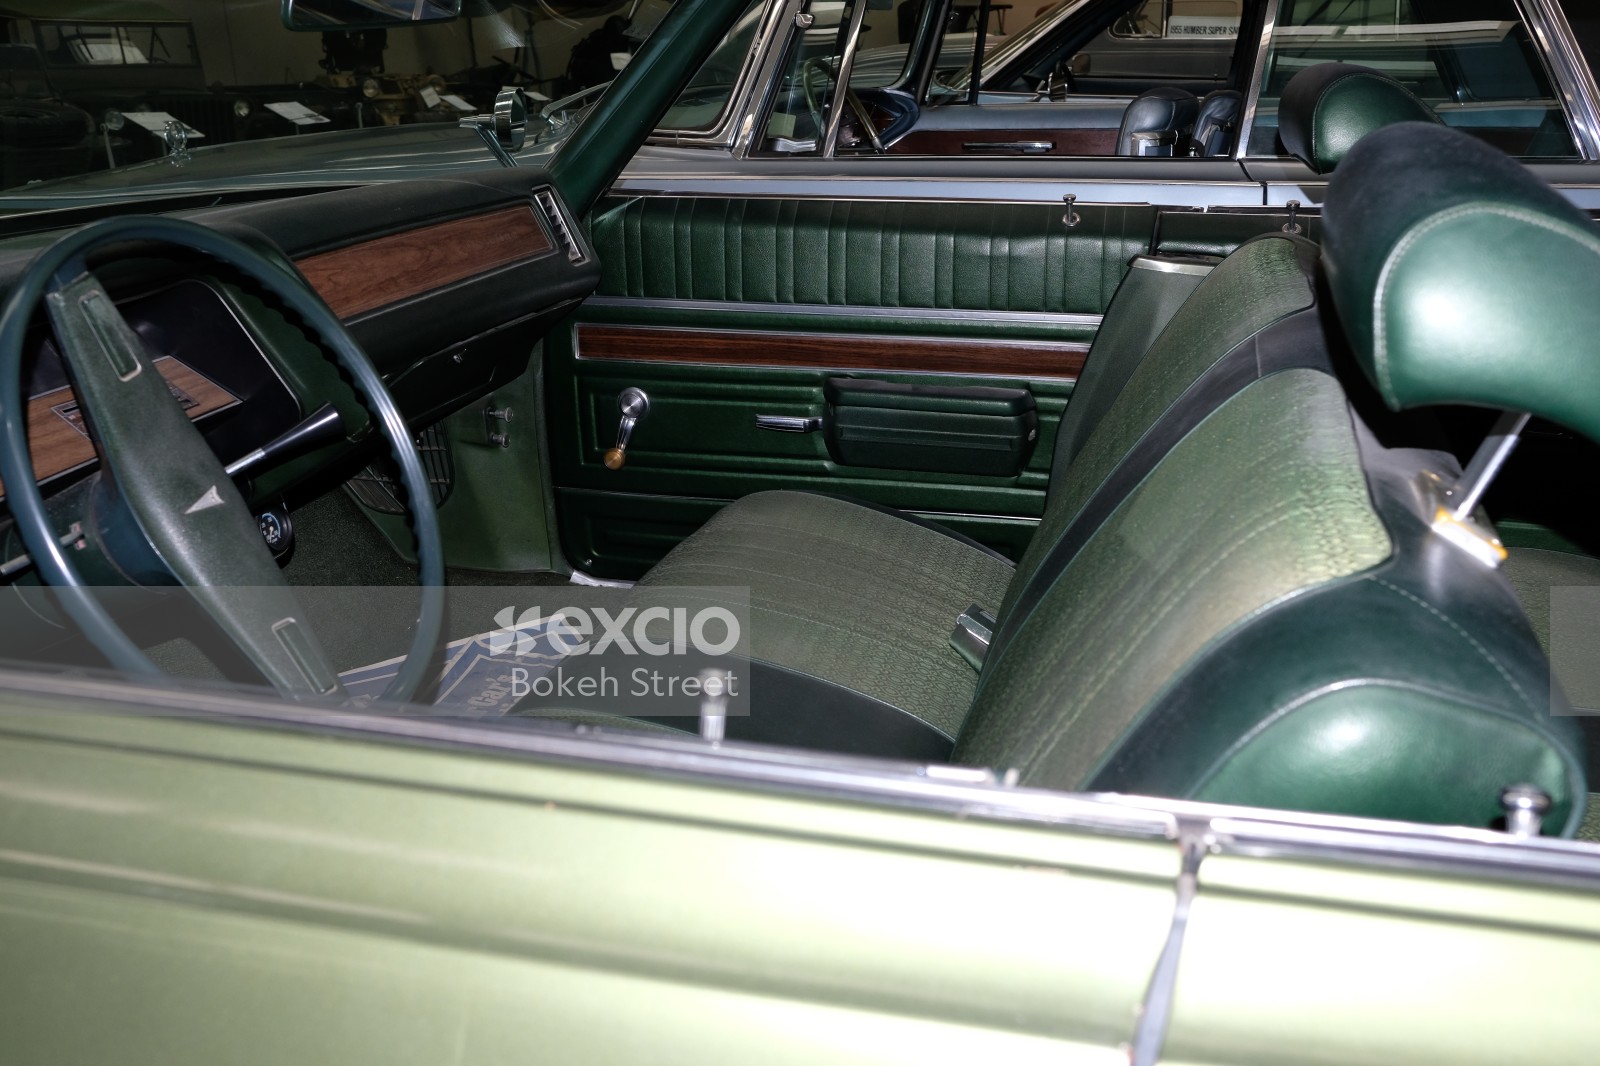 Classic green Pontiac interior bench seat manual windows